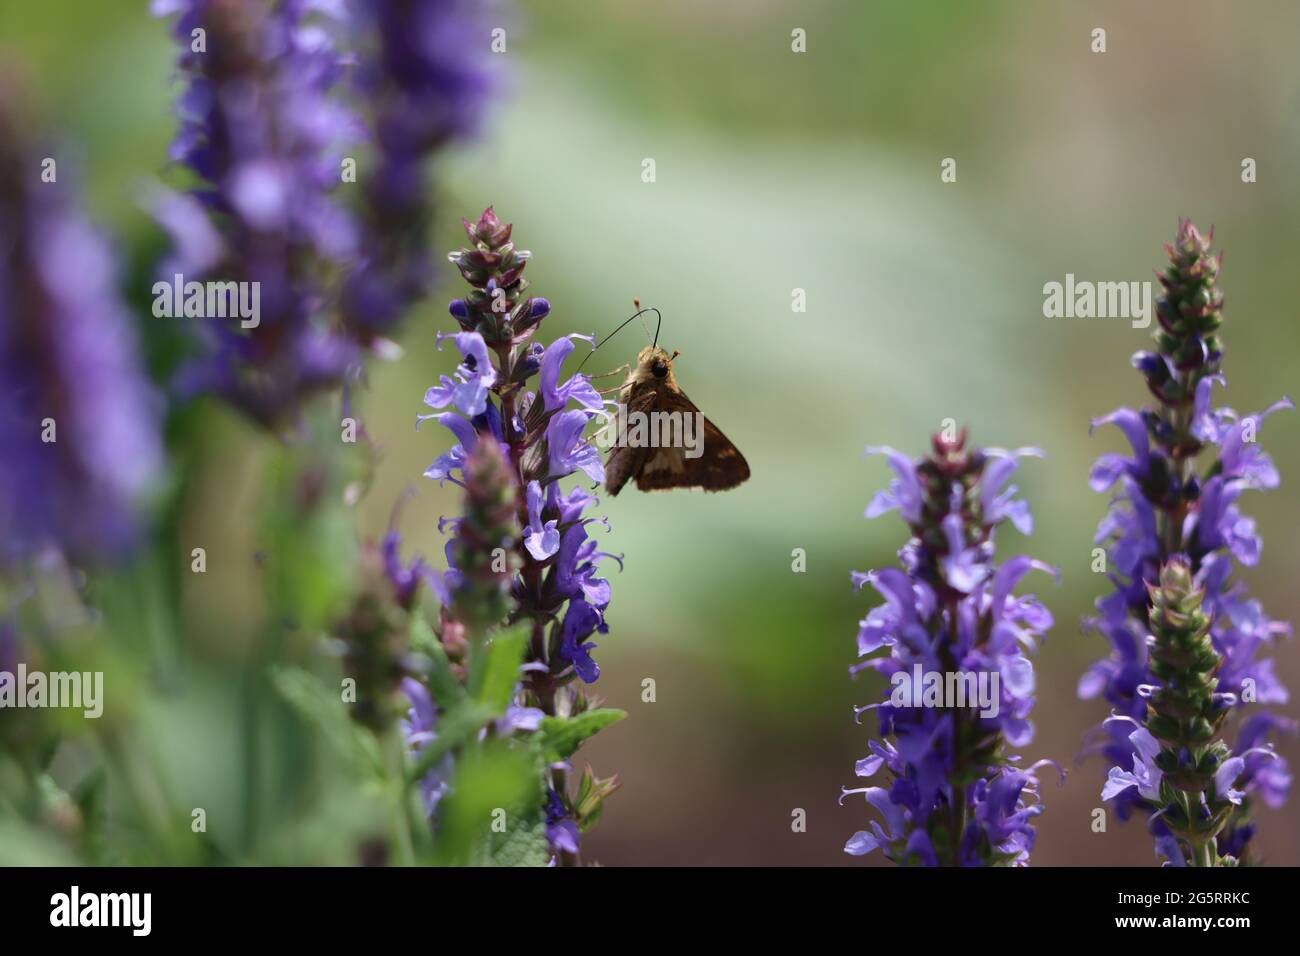 A Peck's skipper butterfly on purple wood sage flowers Stock Photo